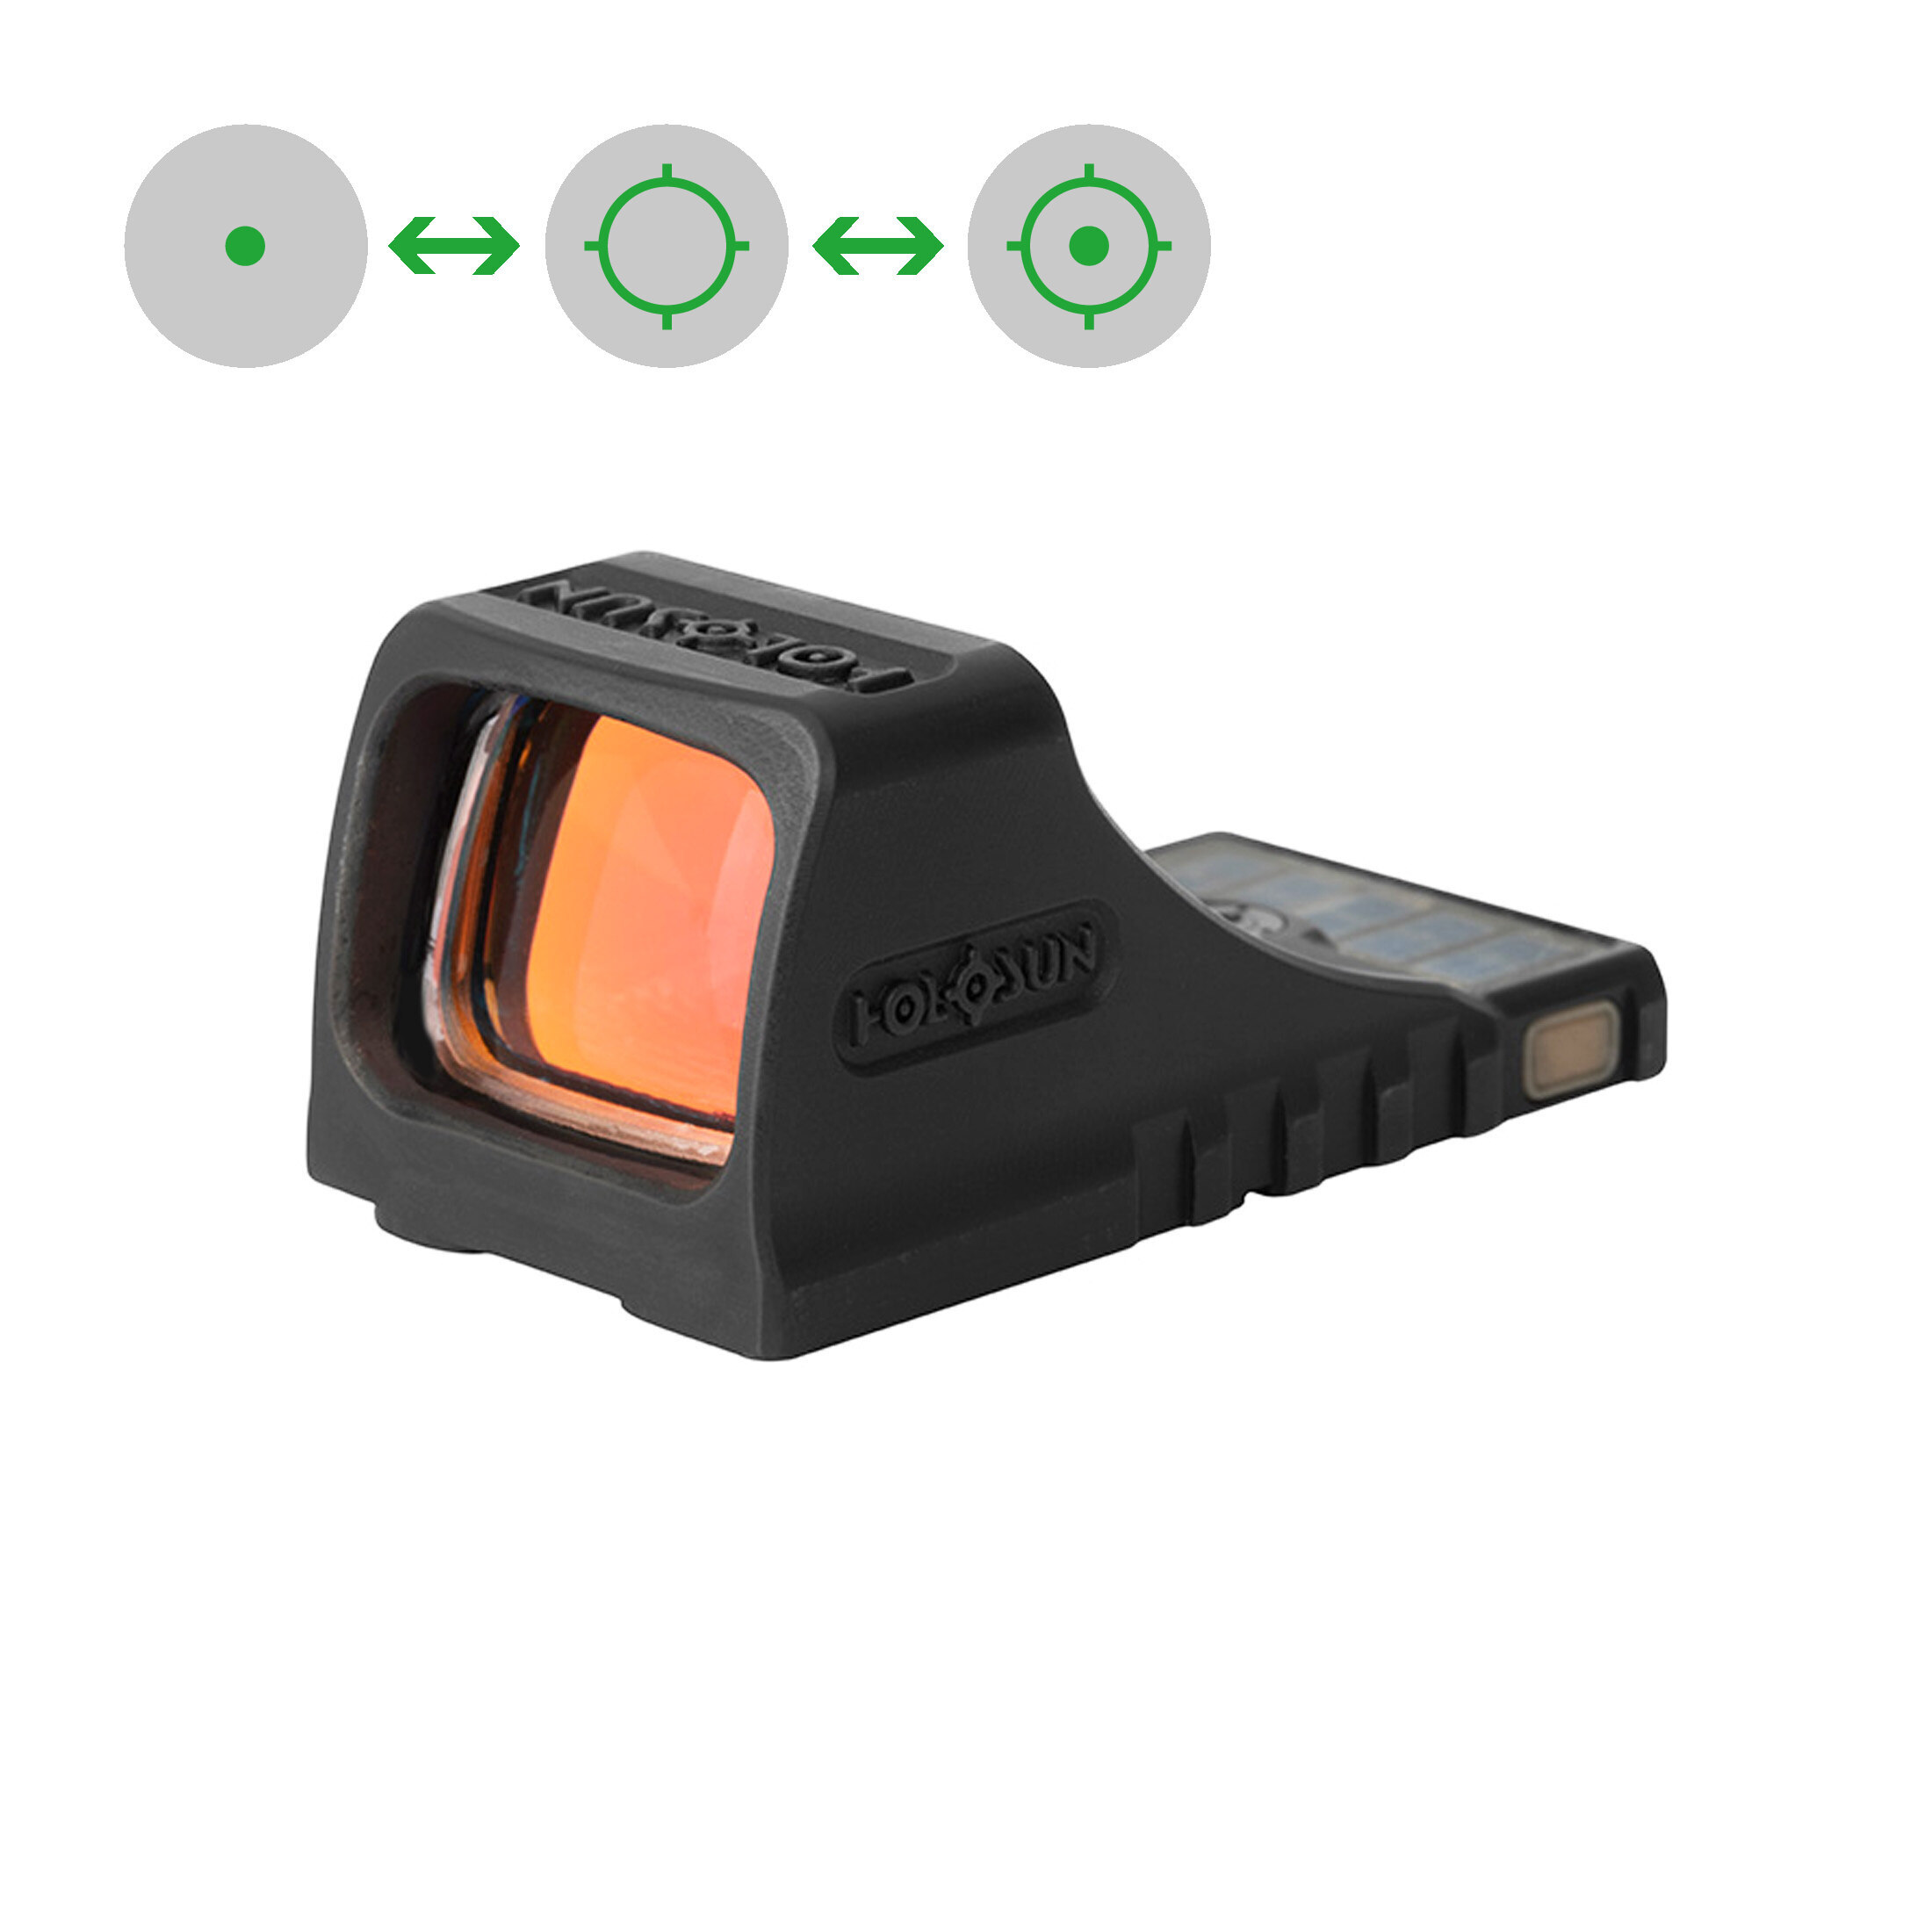 Holosun SCS-MOS-GR open reflex green dot sight switchable 2MOA dot, 32MOA circle dot reticle solar …